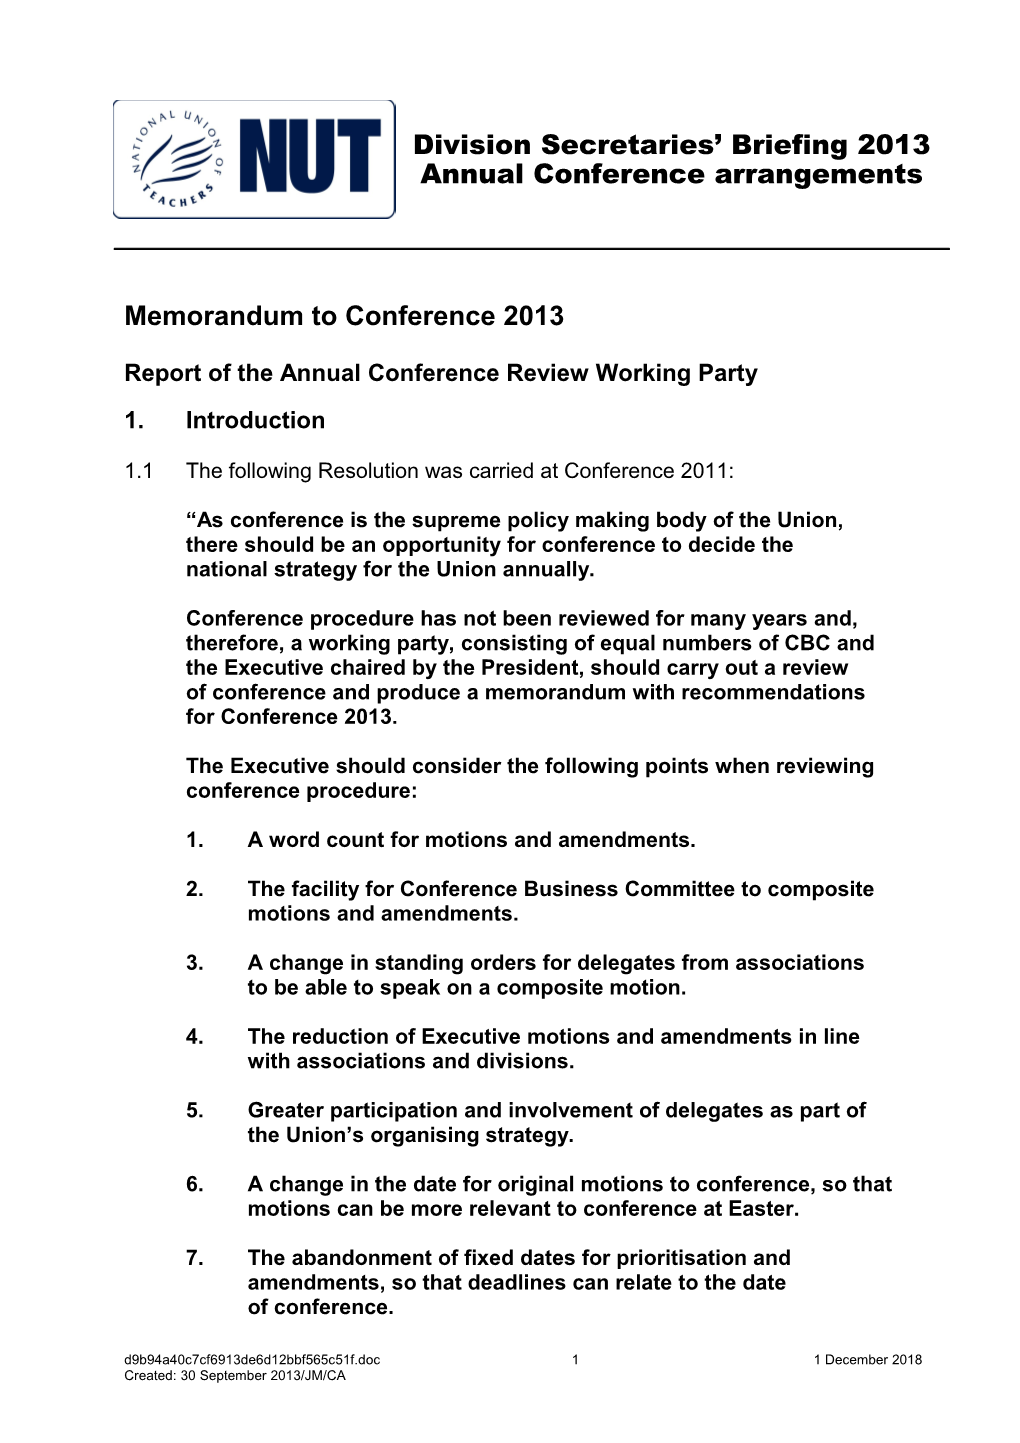 Memorandum to Conference 2013